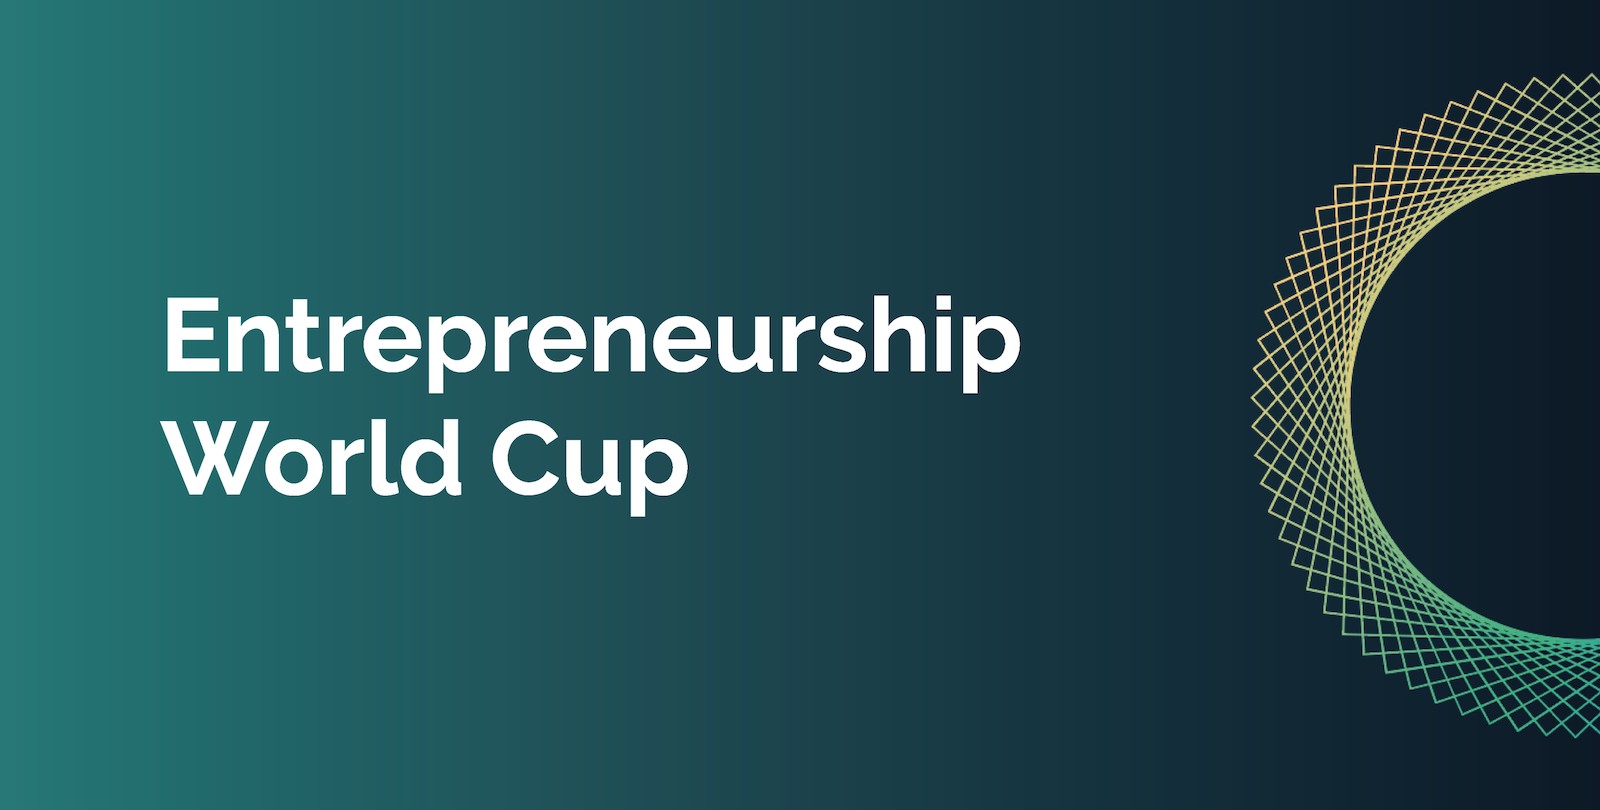 Entrepreneurship World Cup | LinkedIn